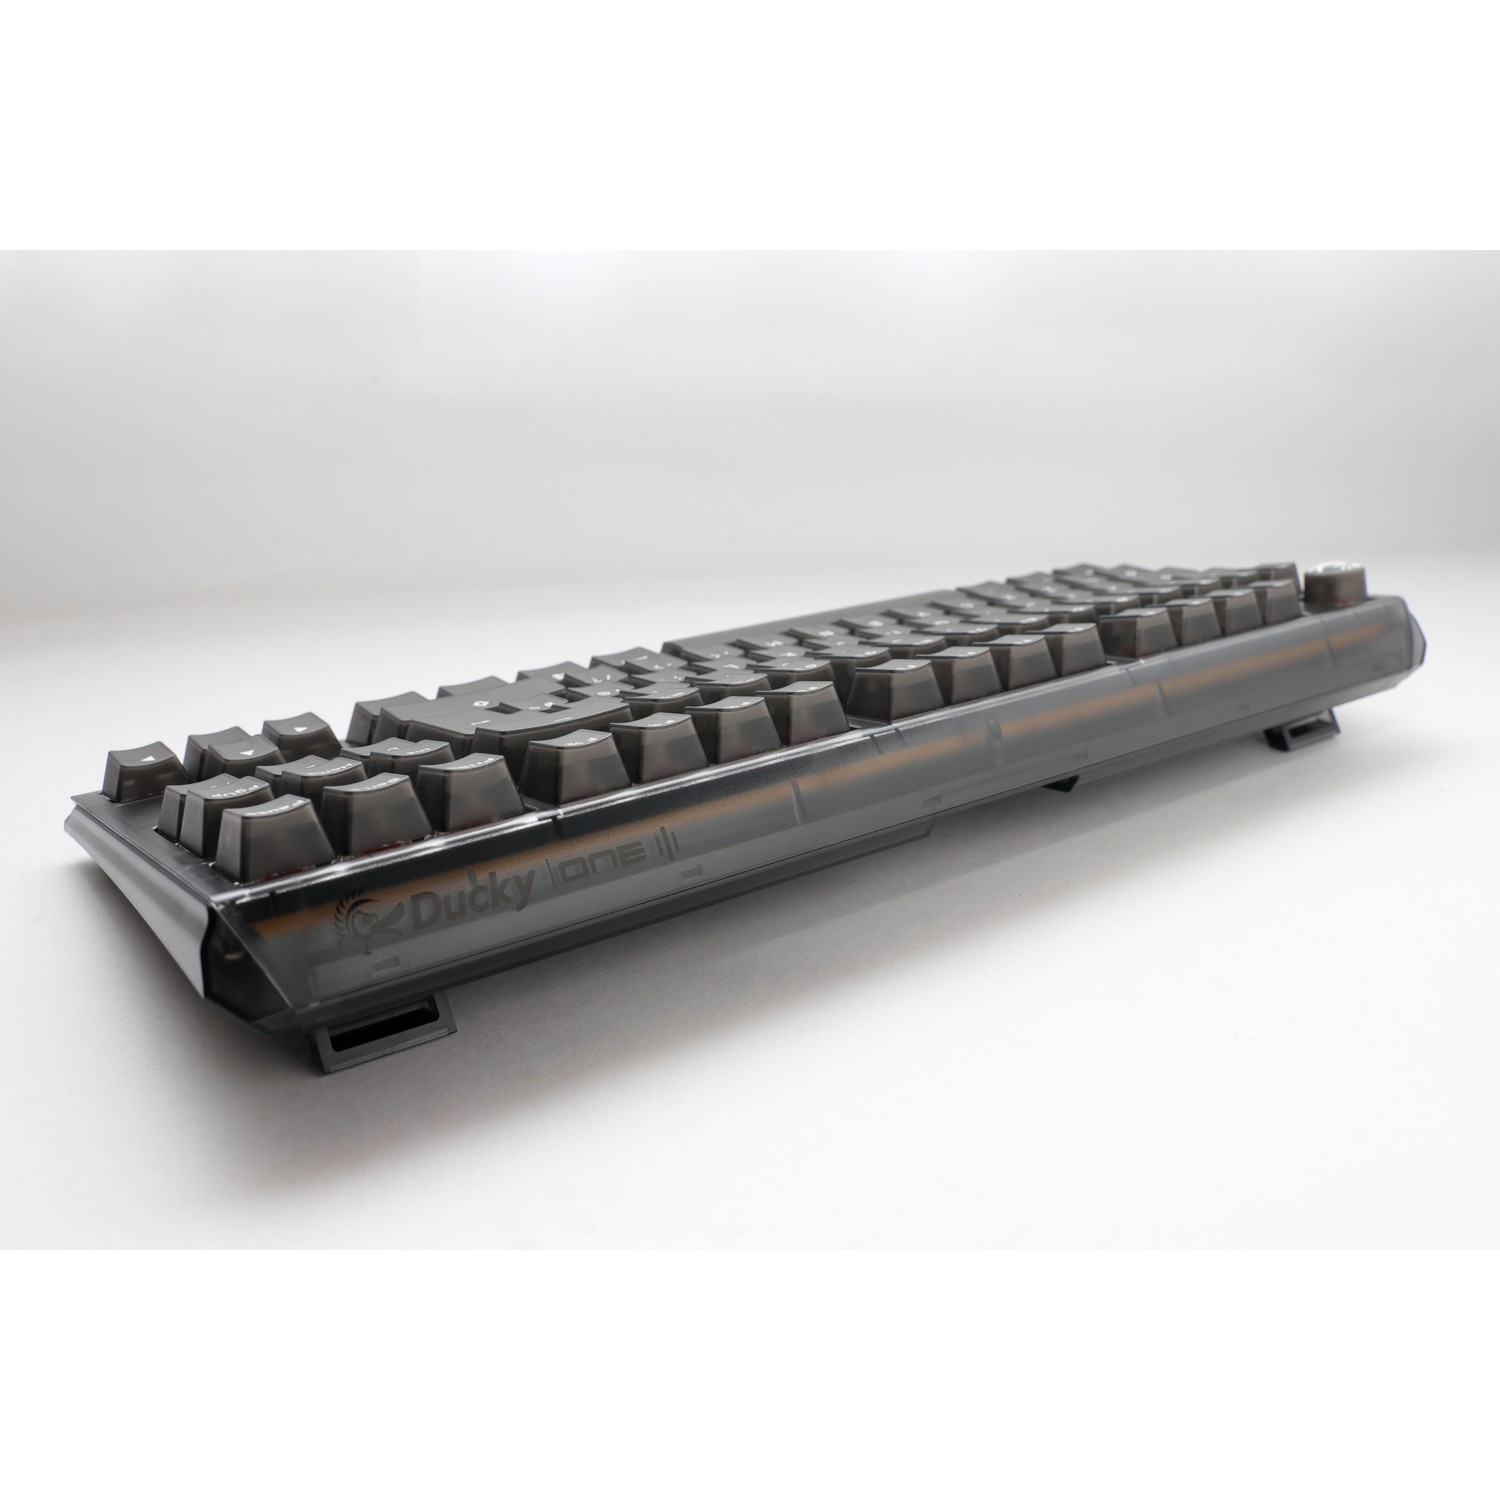 Ducky One 3 Aura TKL 80% Mechanical Gaming Keyboard Black Cherry Red Switch UK Layout